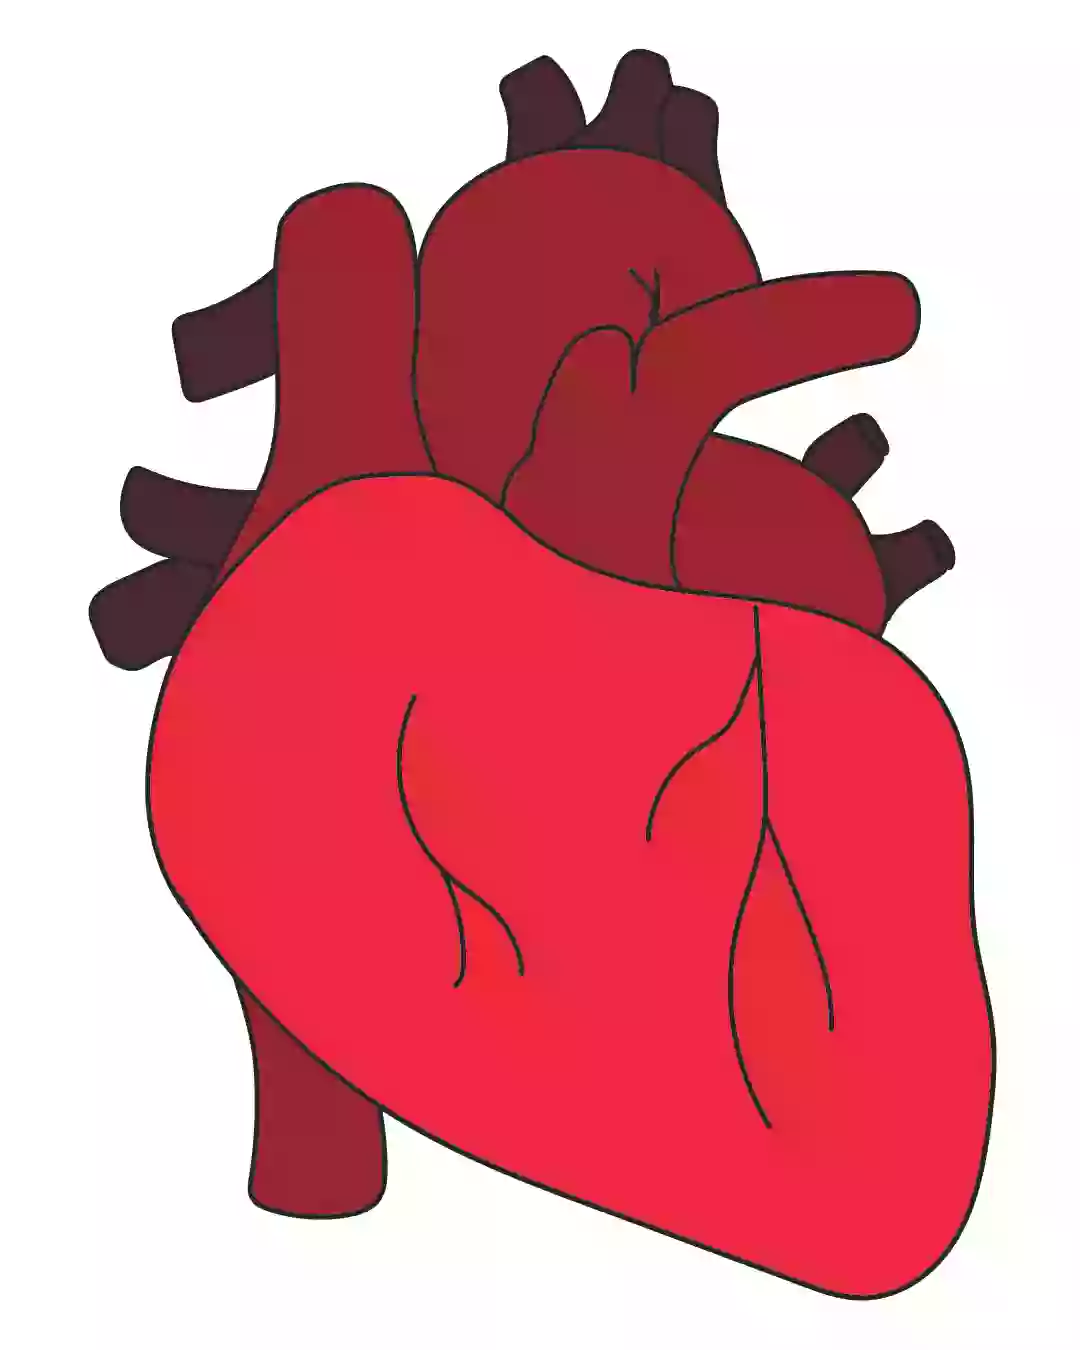 Real Anatomical Human Heart Drawing Art Print by Aaron-H | Society6-saigonsouth.com.vn